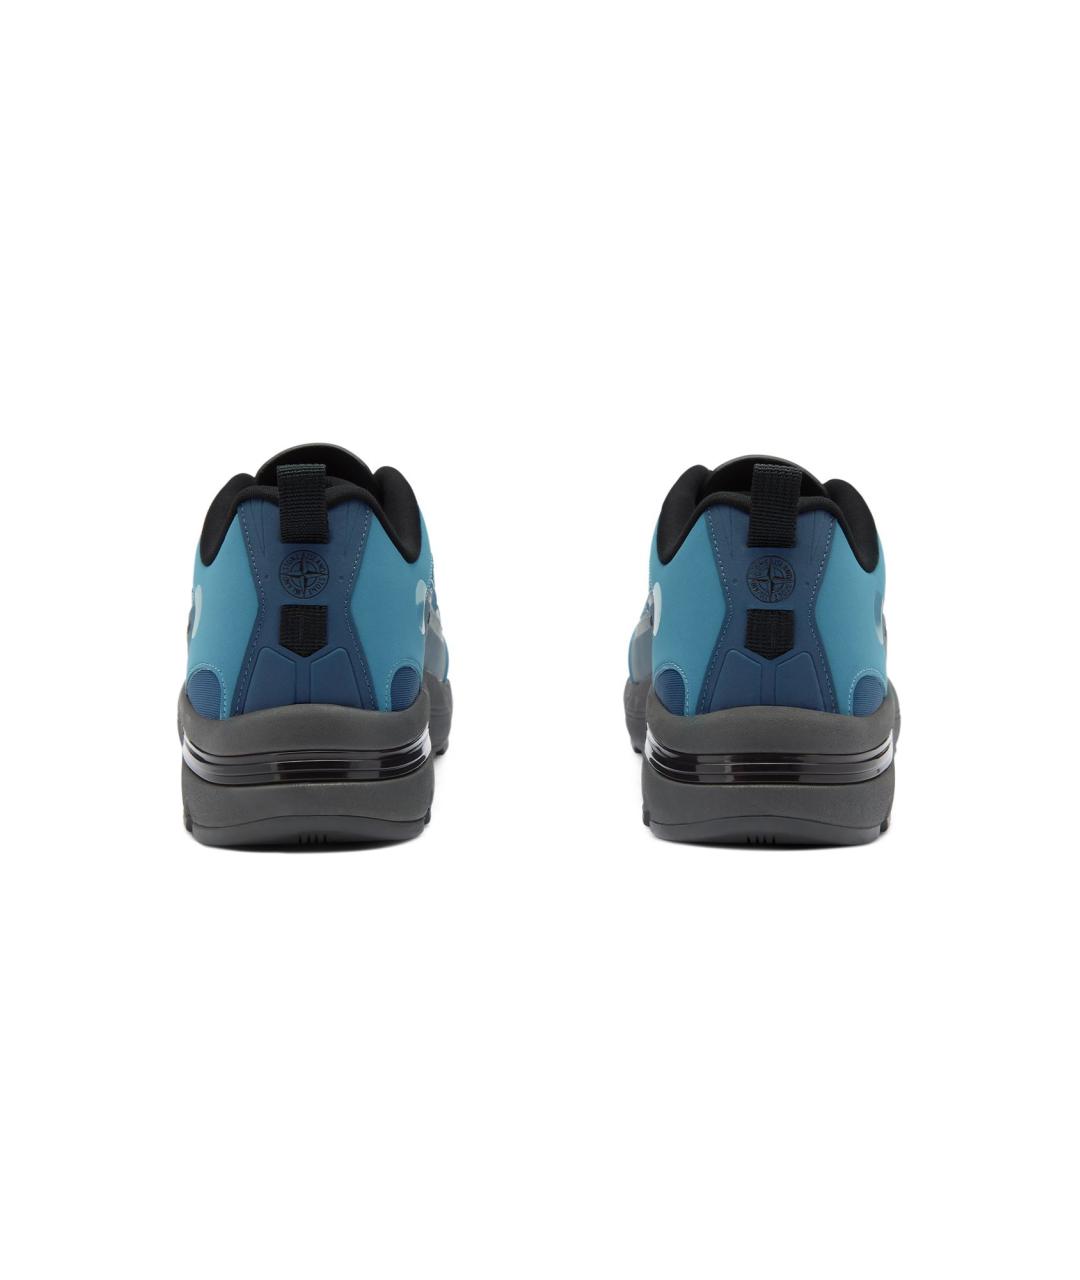 STONE ISLAND Синие синтетические низкие кроссовки / кеды, фото 3